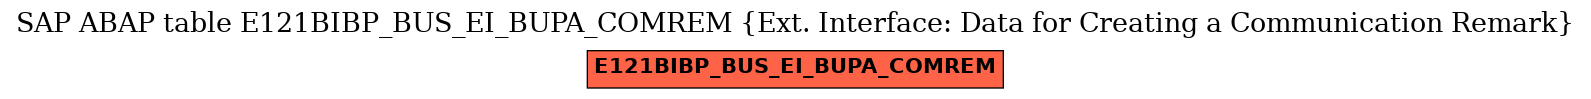 E-R Diagram for table E121BIBP_BUS_EI_BUPA_COMREM (Ext. Interface: Data for Creating a Communication Remark)